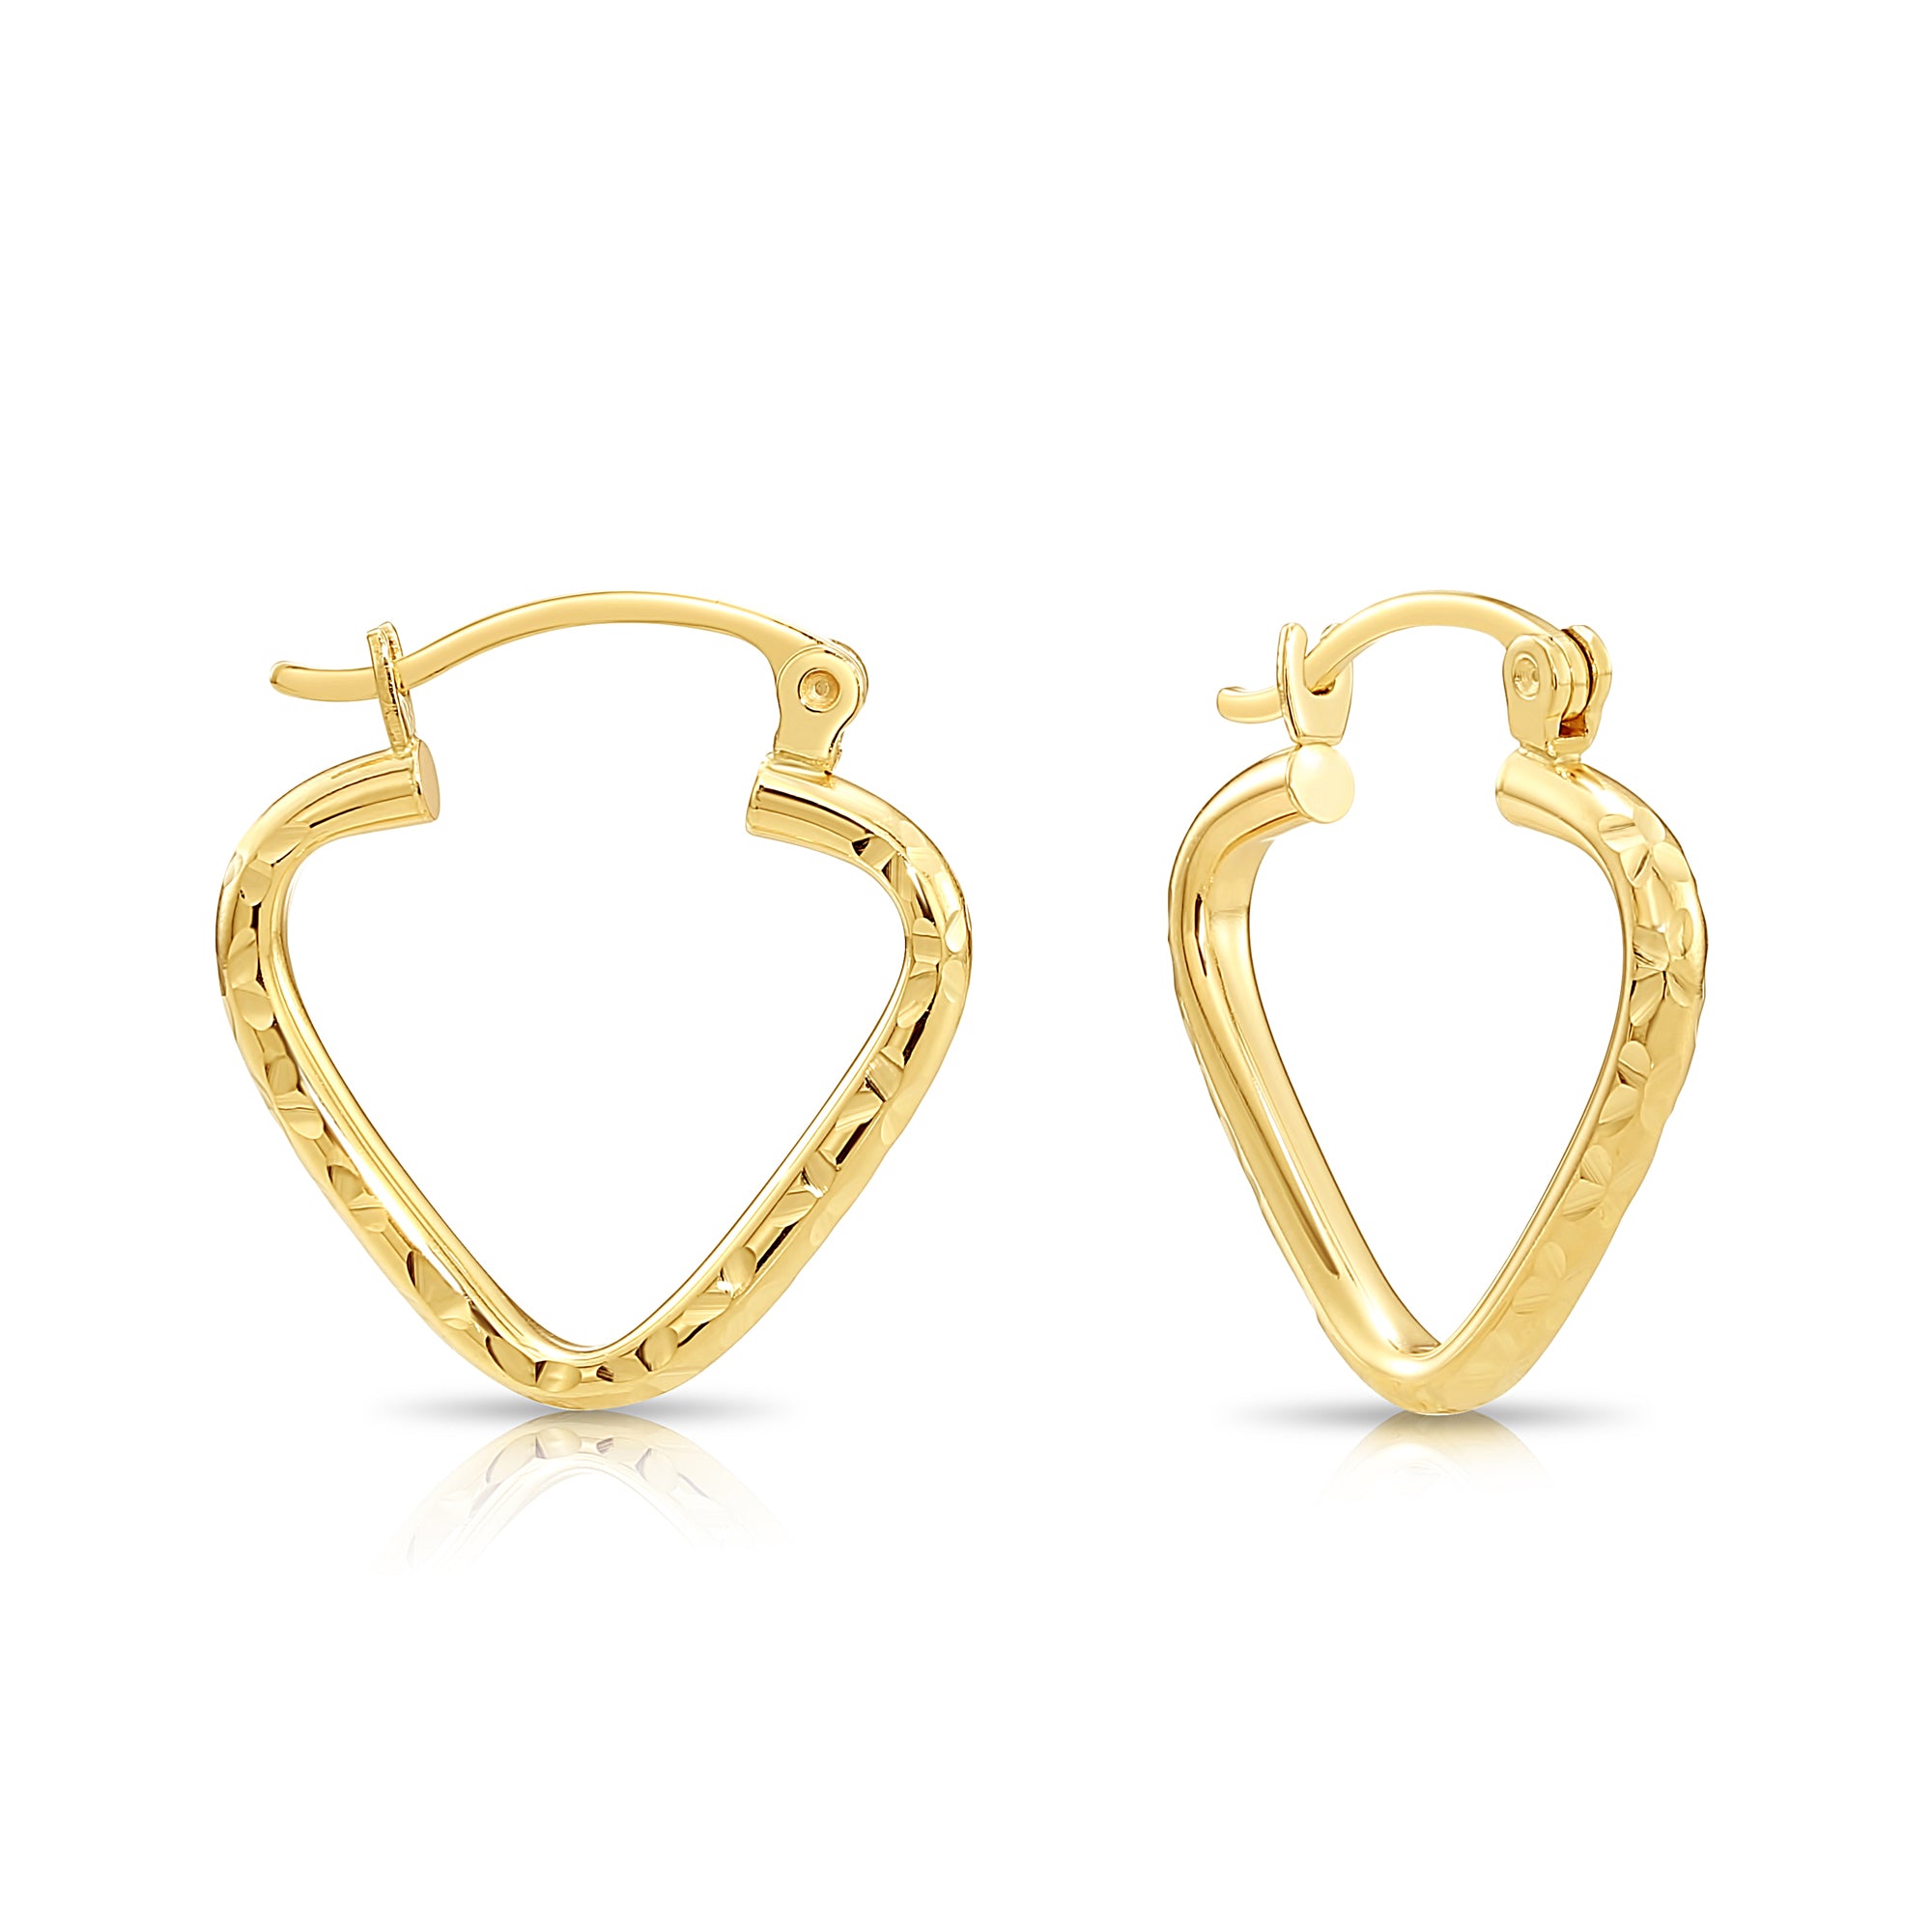 14k Yellow Gold Heart Hoop Earrings, Small Hoops with Diamond-Cut Engravings, Design 